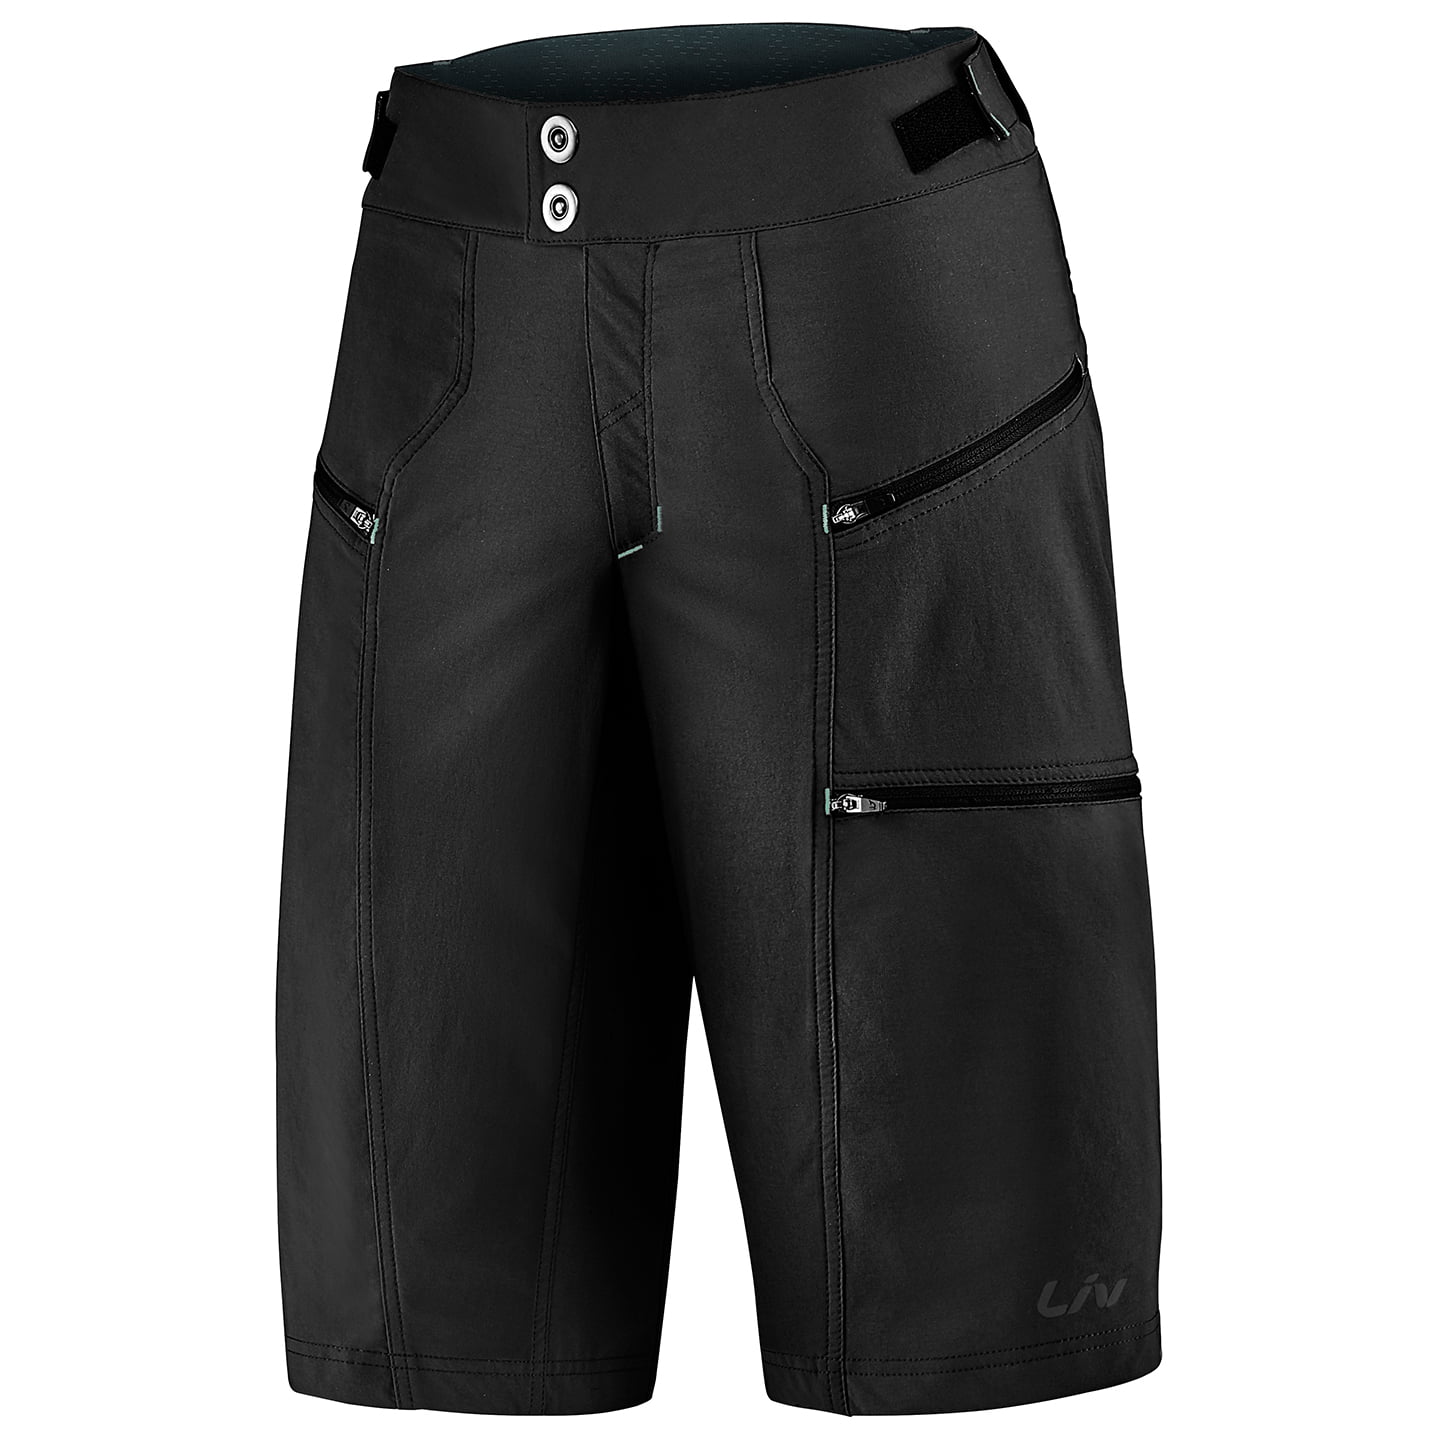 LIV Energize w/o Pad Women’s Bike Shorts, size S, MTB shorts, MTB clothing